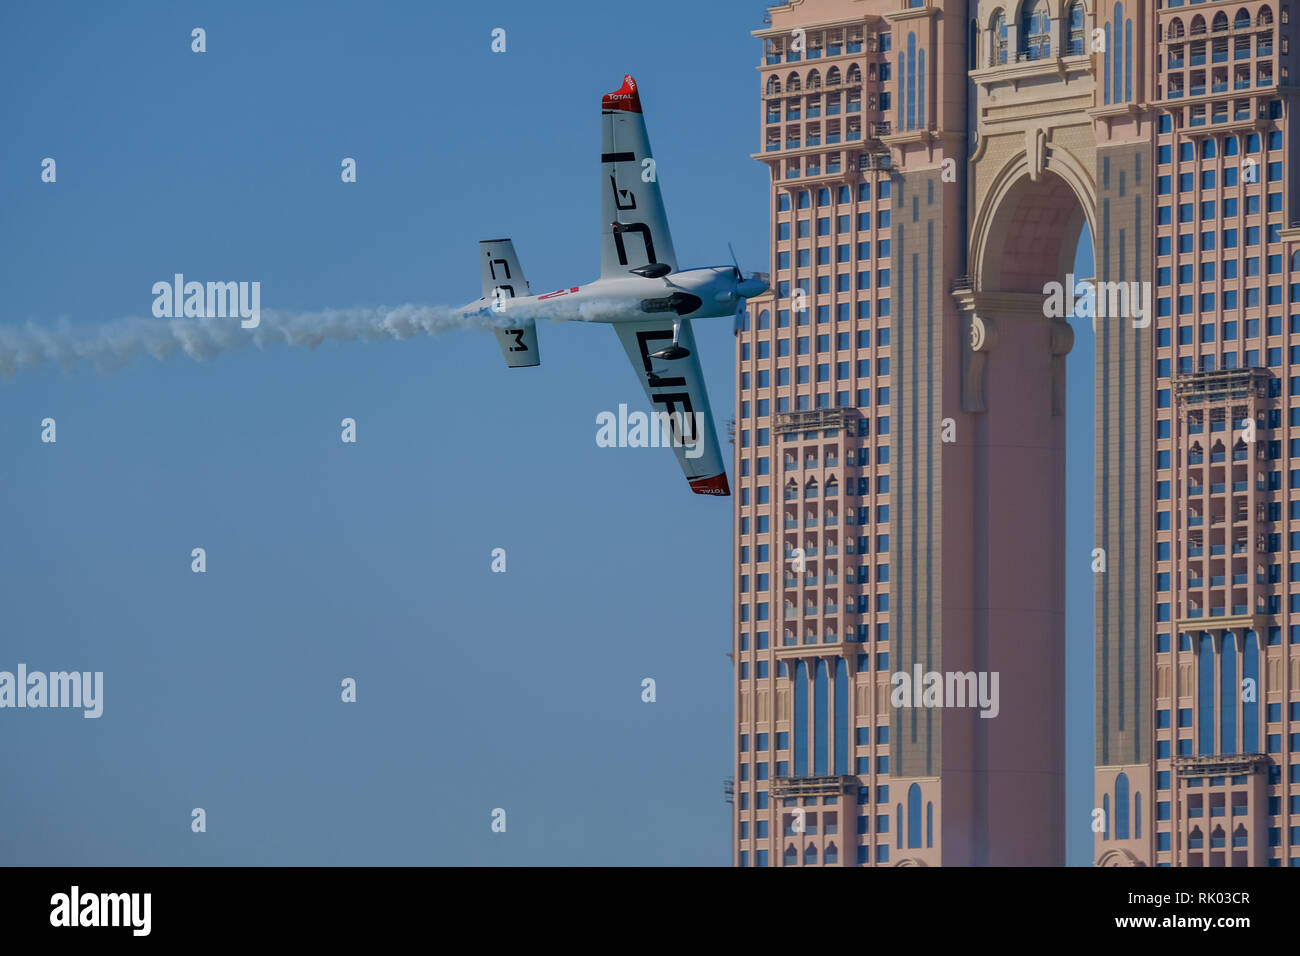 Abu Dhabi, negli Emirati Arabi Uniti. 8 Feb 2019. Abu Dhabi, Red Bull Air Race 2019 - turno di qualificazione. Credito: Fahd Khan / Live News Alamy Credito: Fahd Khan/Alamy Live News Foto Stock